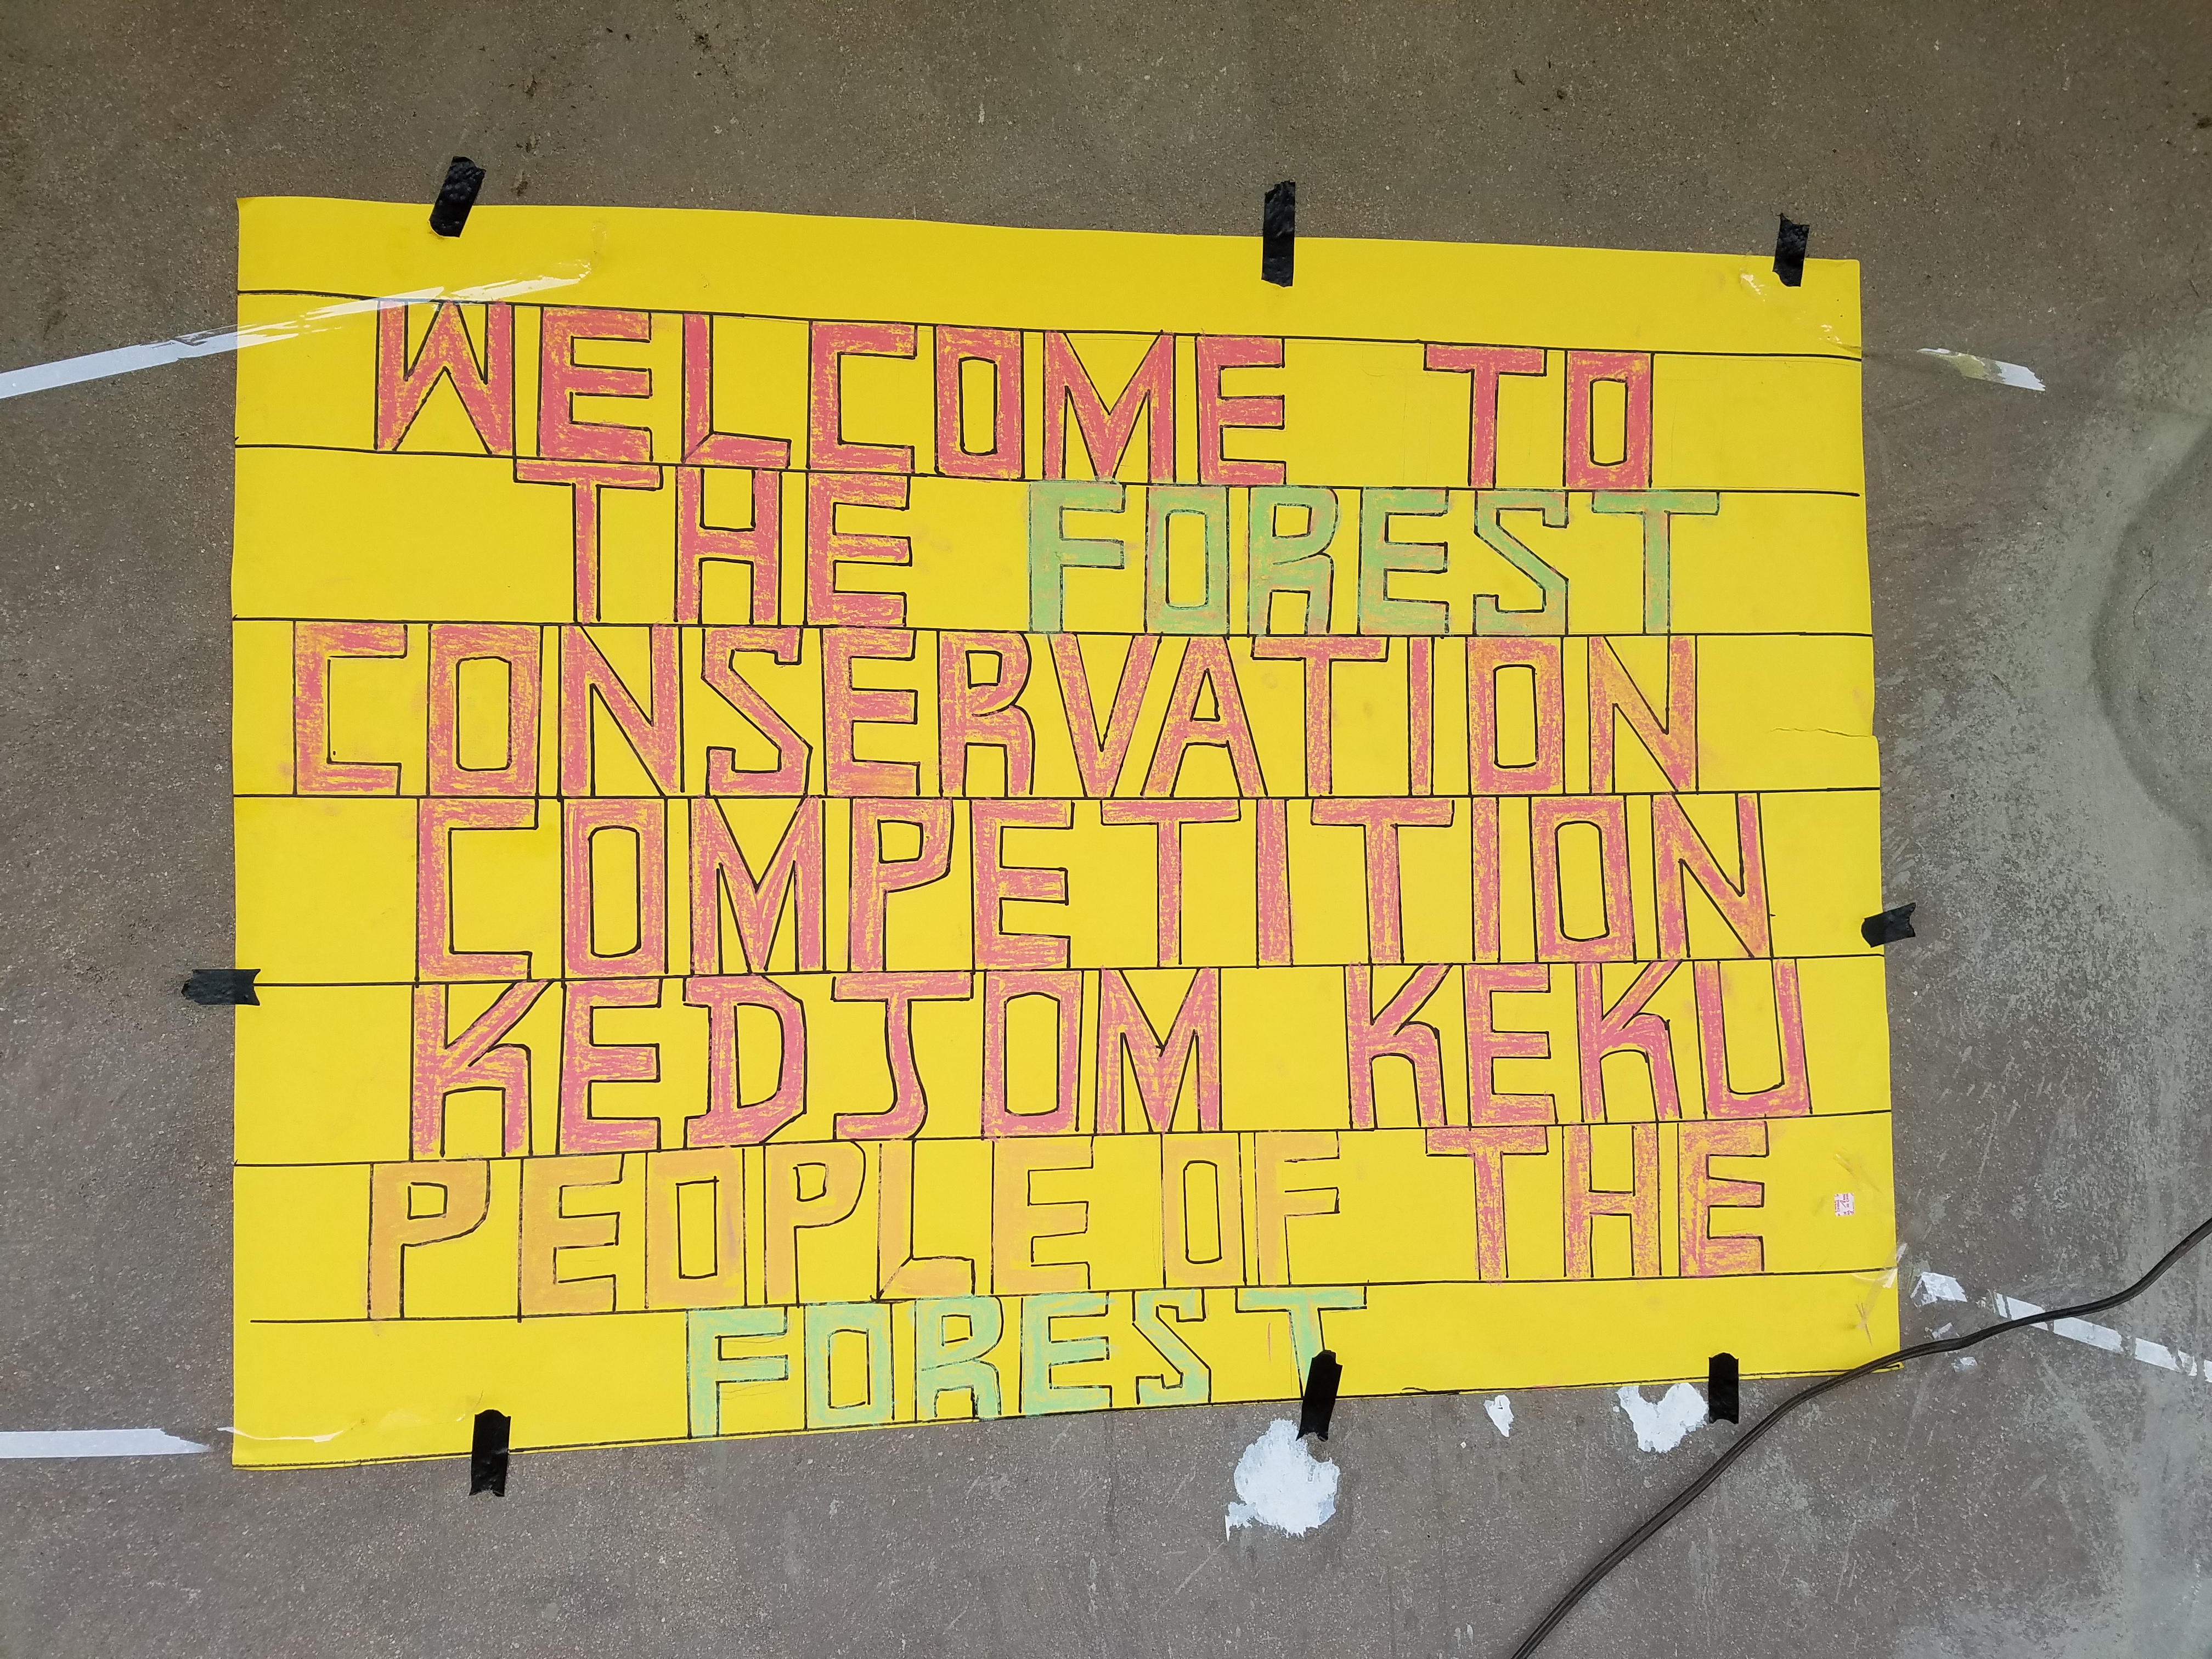 The Kedjom-keku Community Forest Project